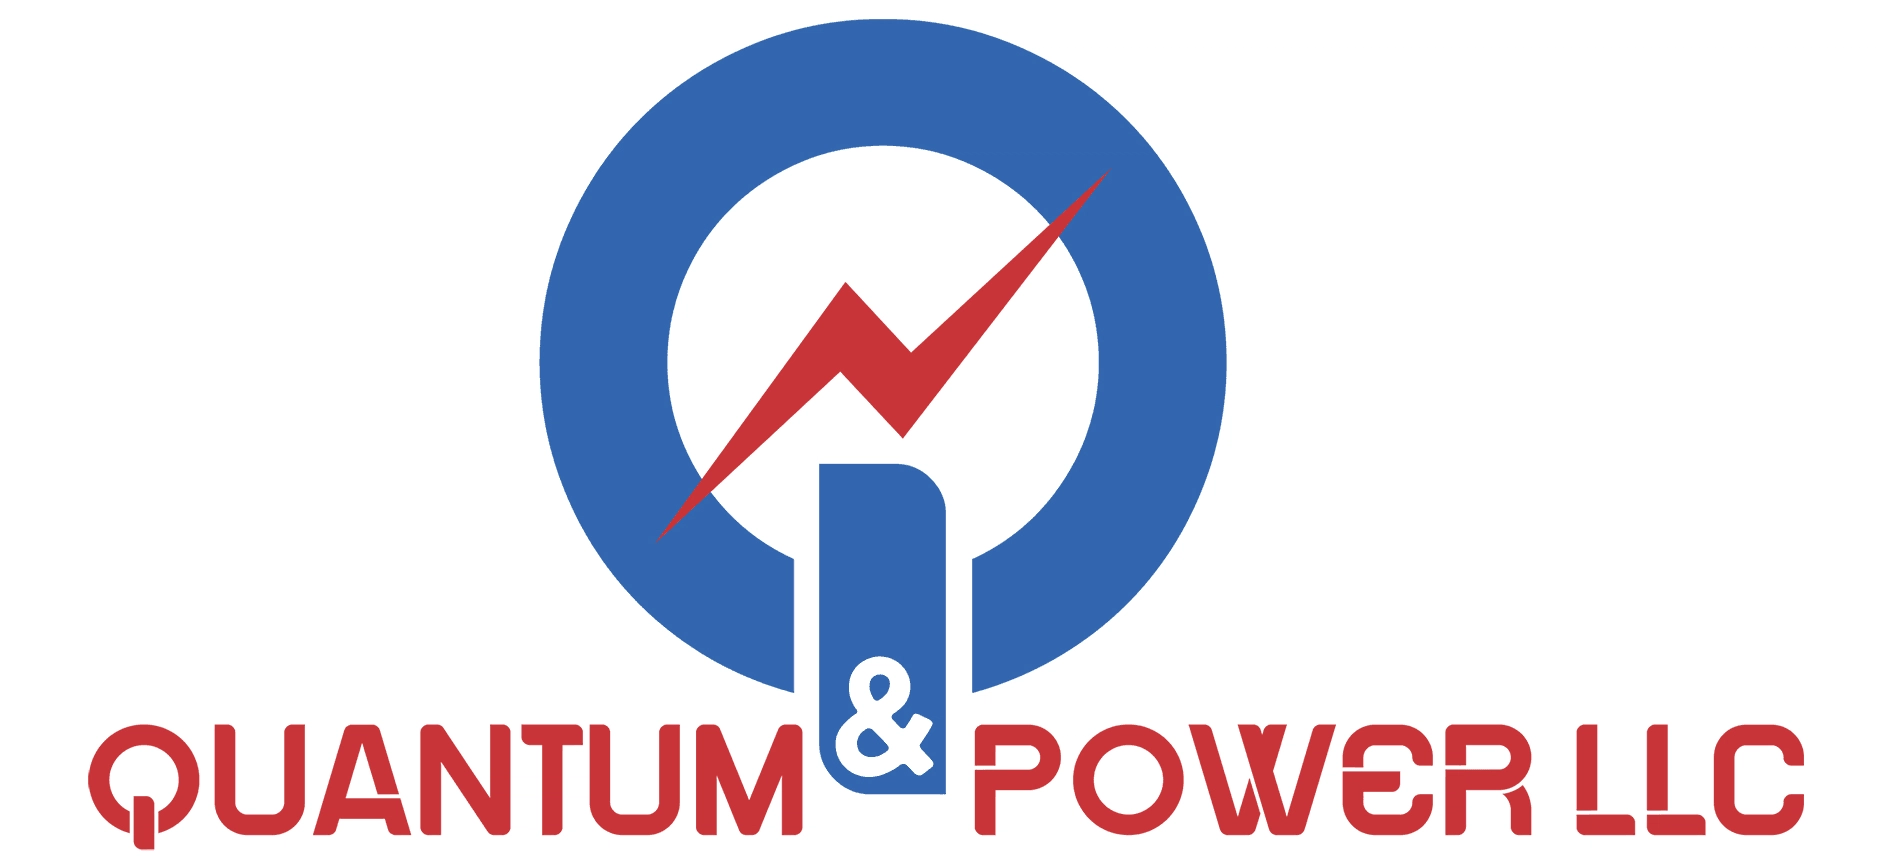 Quantum & Power LLC Logo